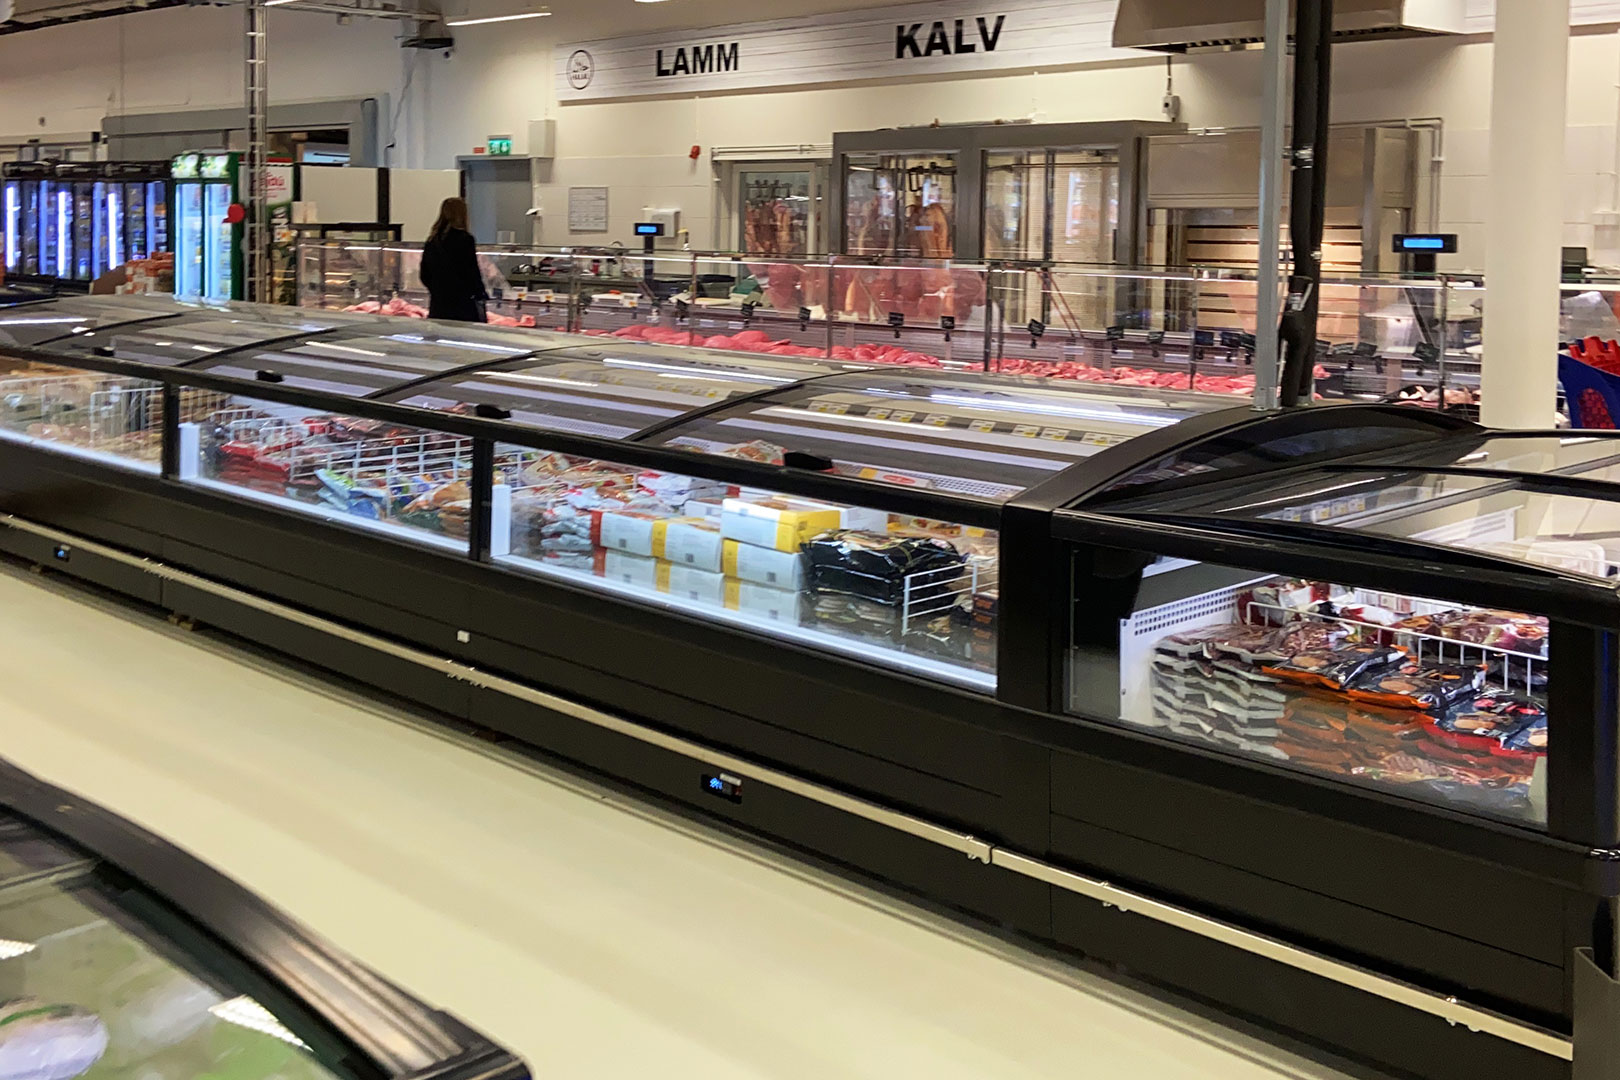 Frozen foods units Alaska DE MH 200 LT O/C M, supermarket (Sweden)